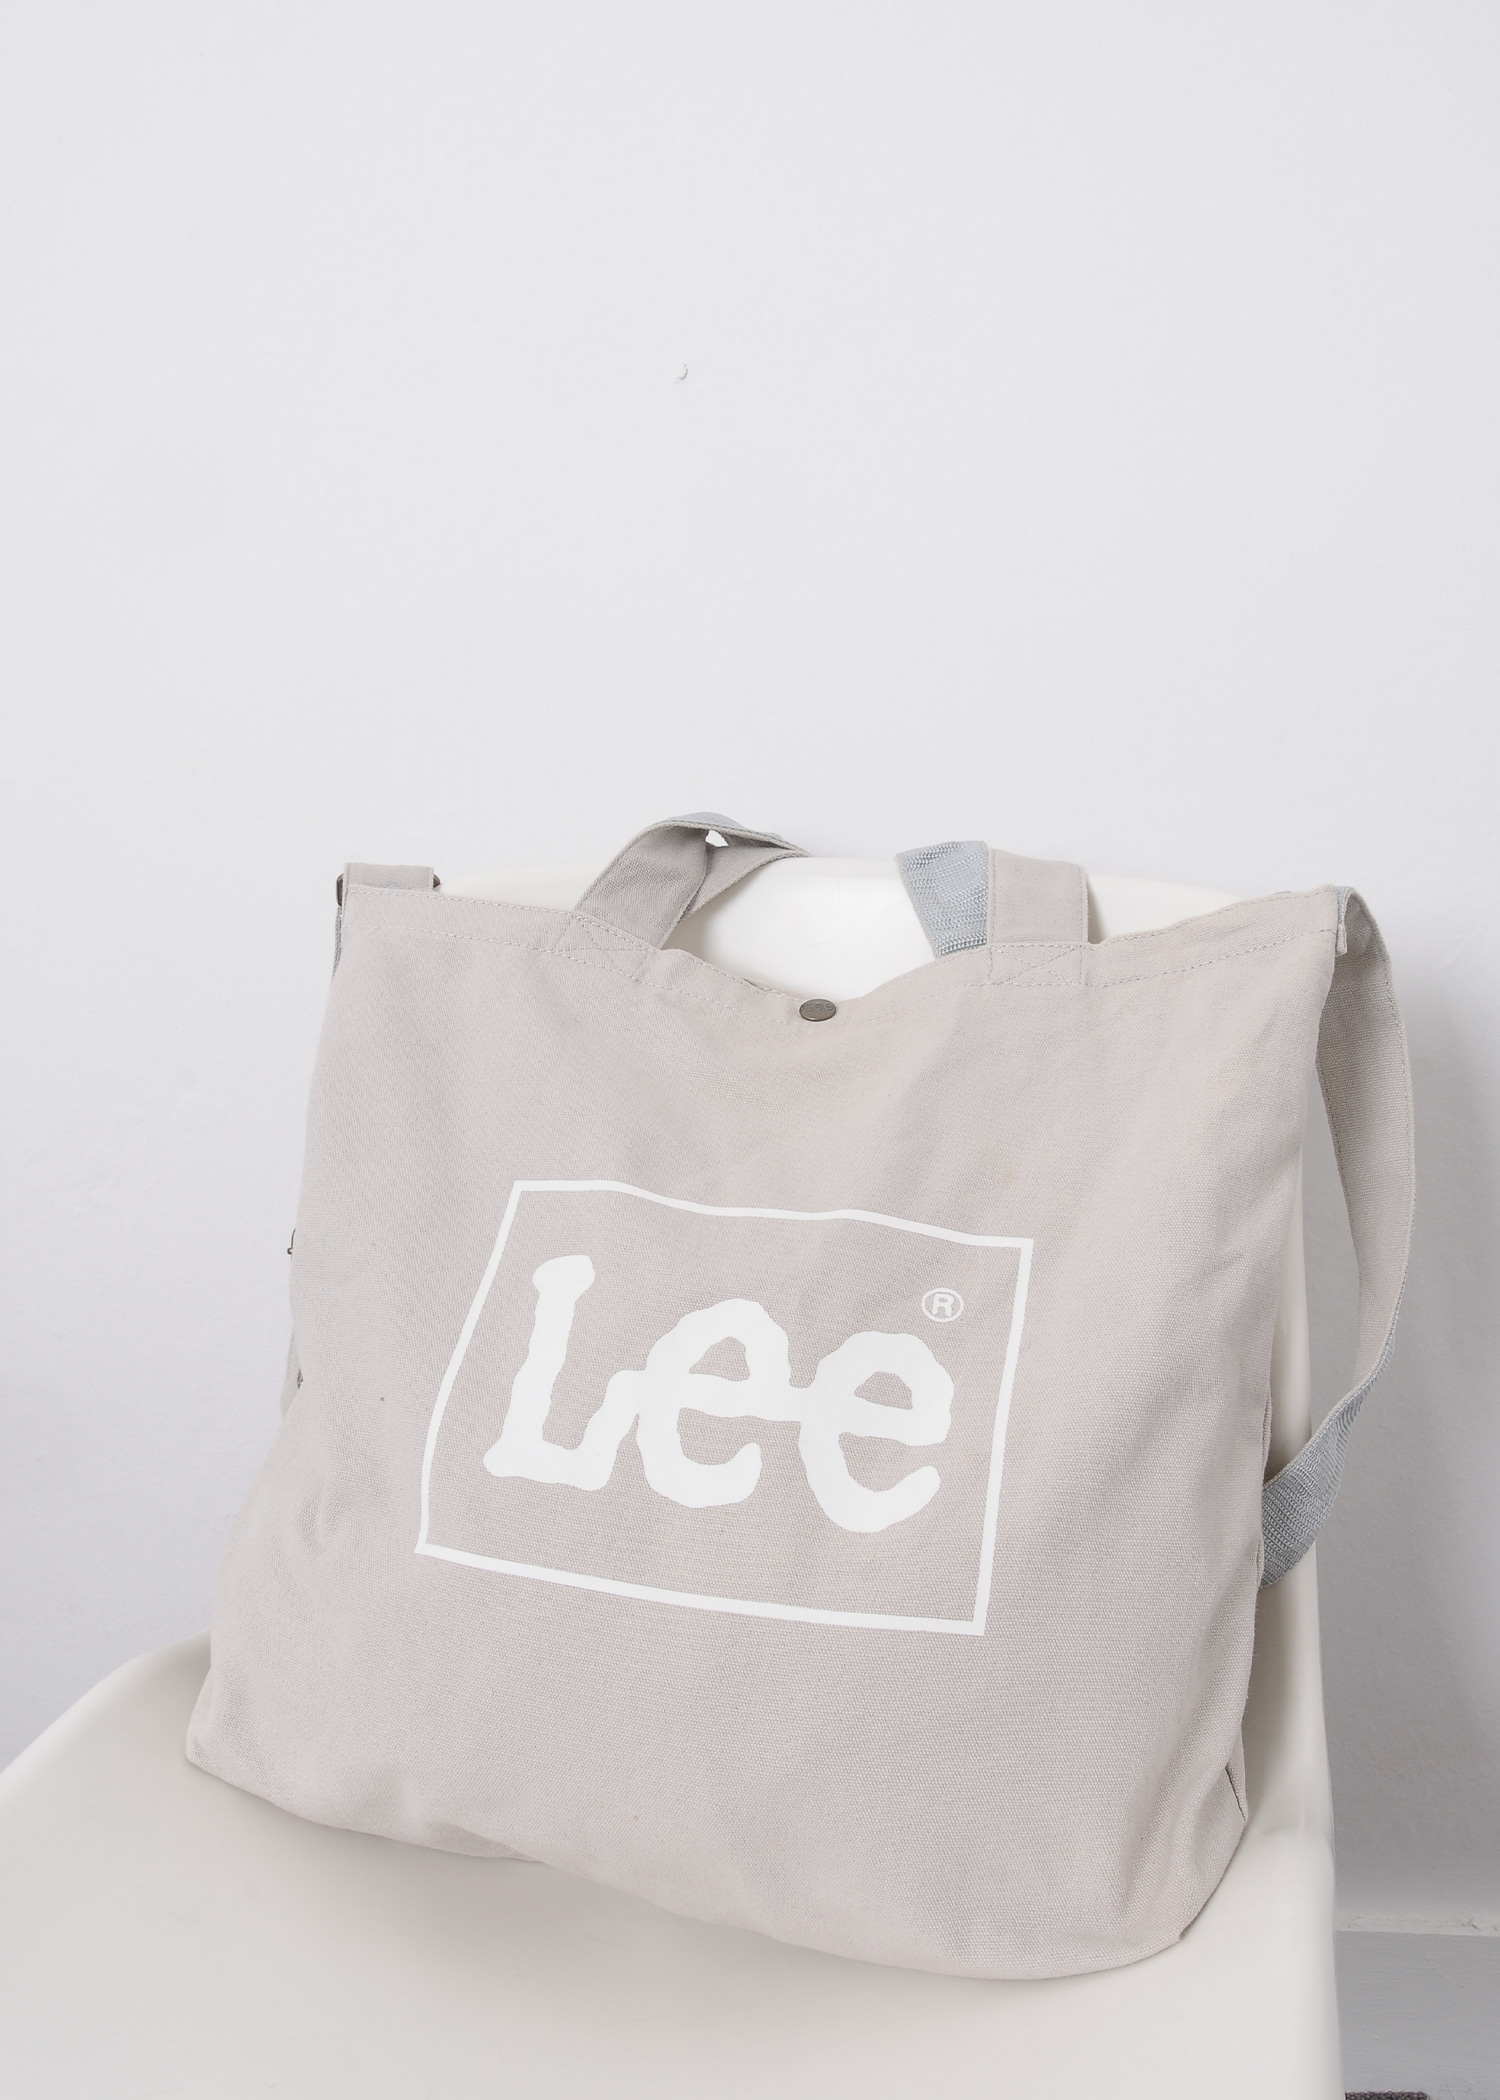 Lee cotton cross bag